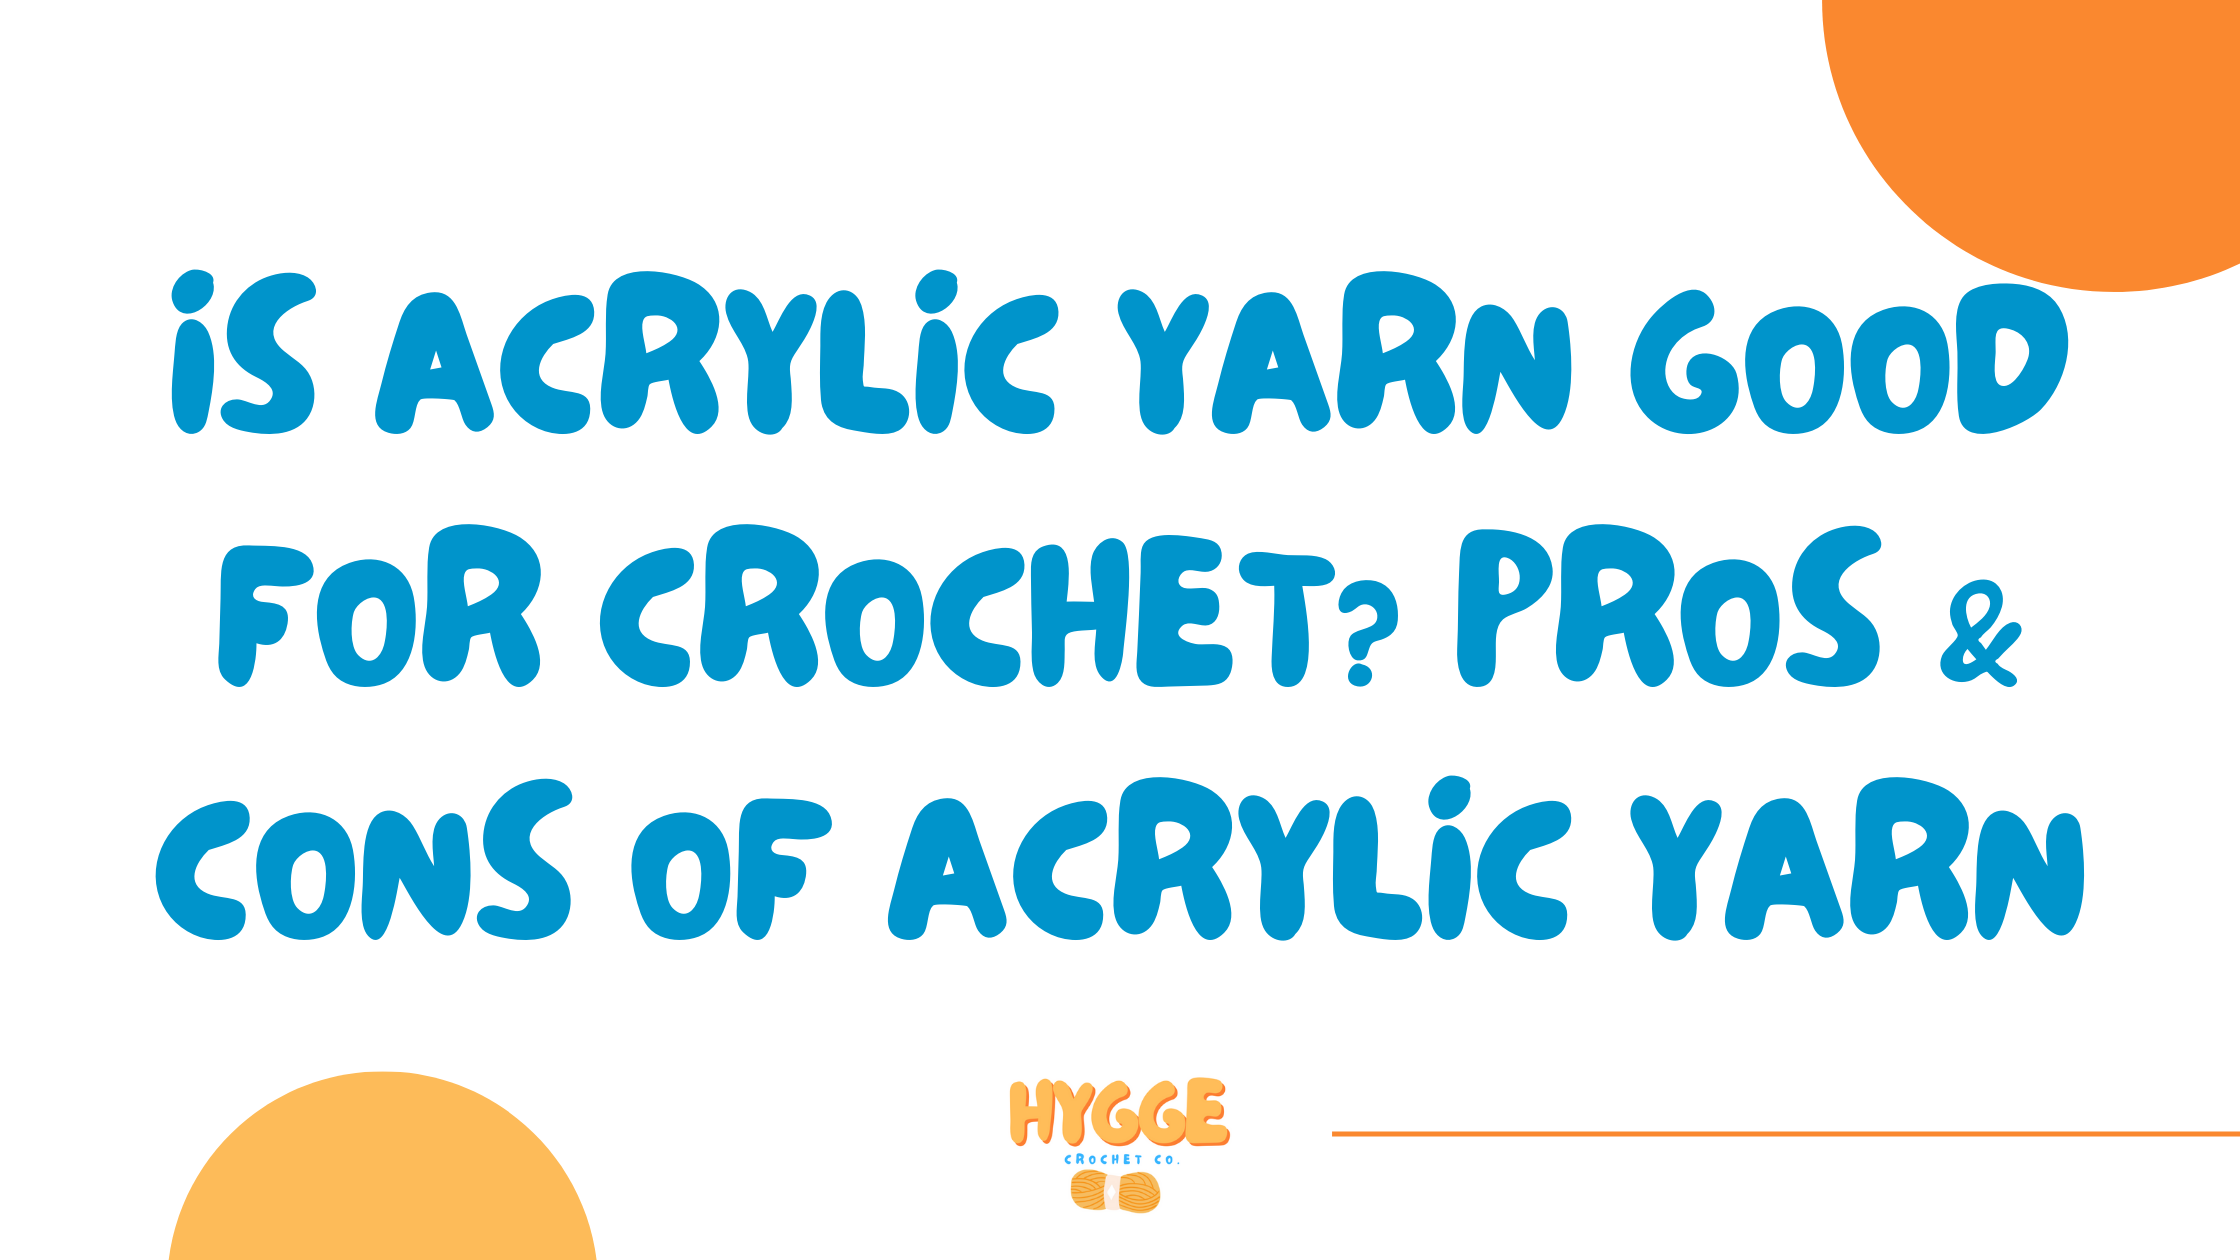 is acrylic yarn good for crochet? pros and cons of acrylic yarn